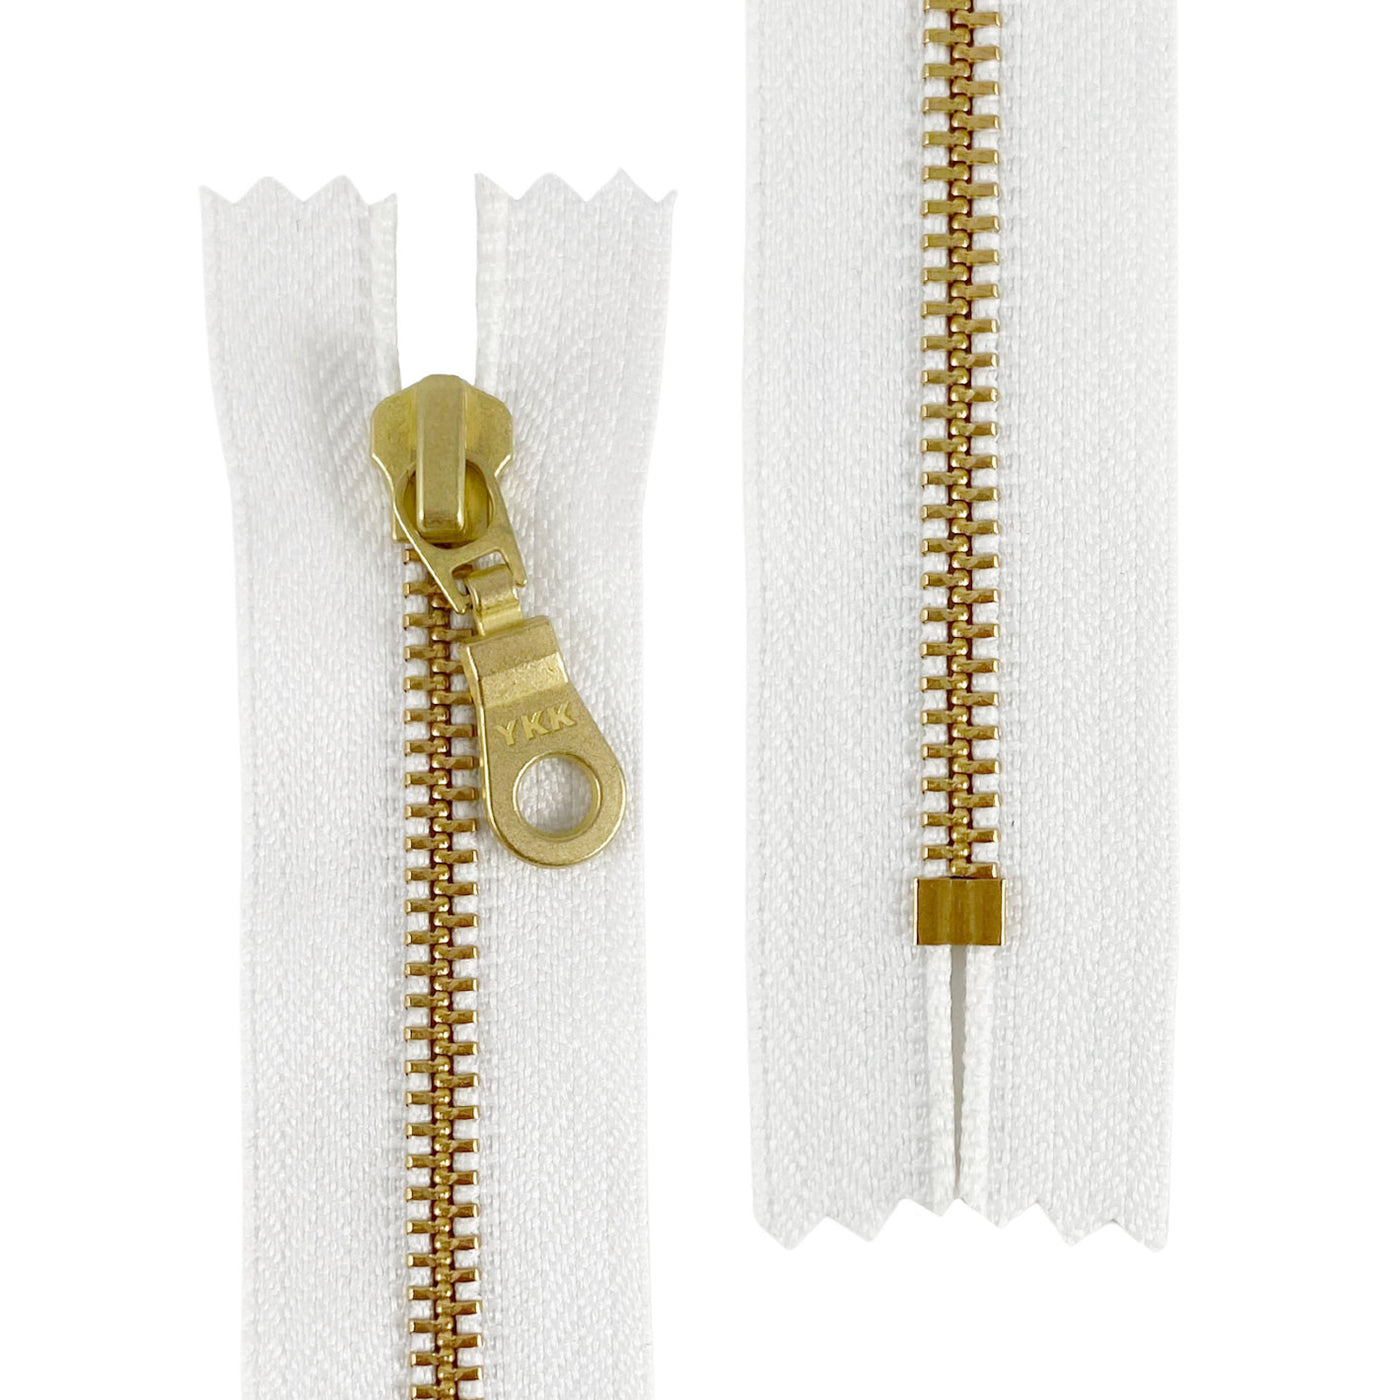 White - #5 YKK Golden Brass Metal Zipper - 6" to 14"